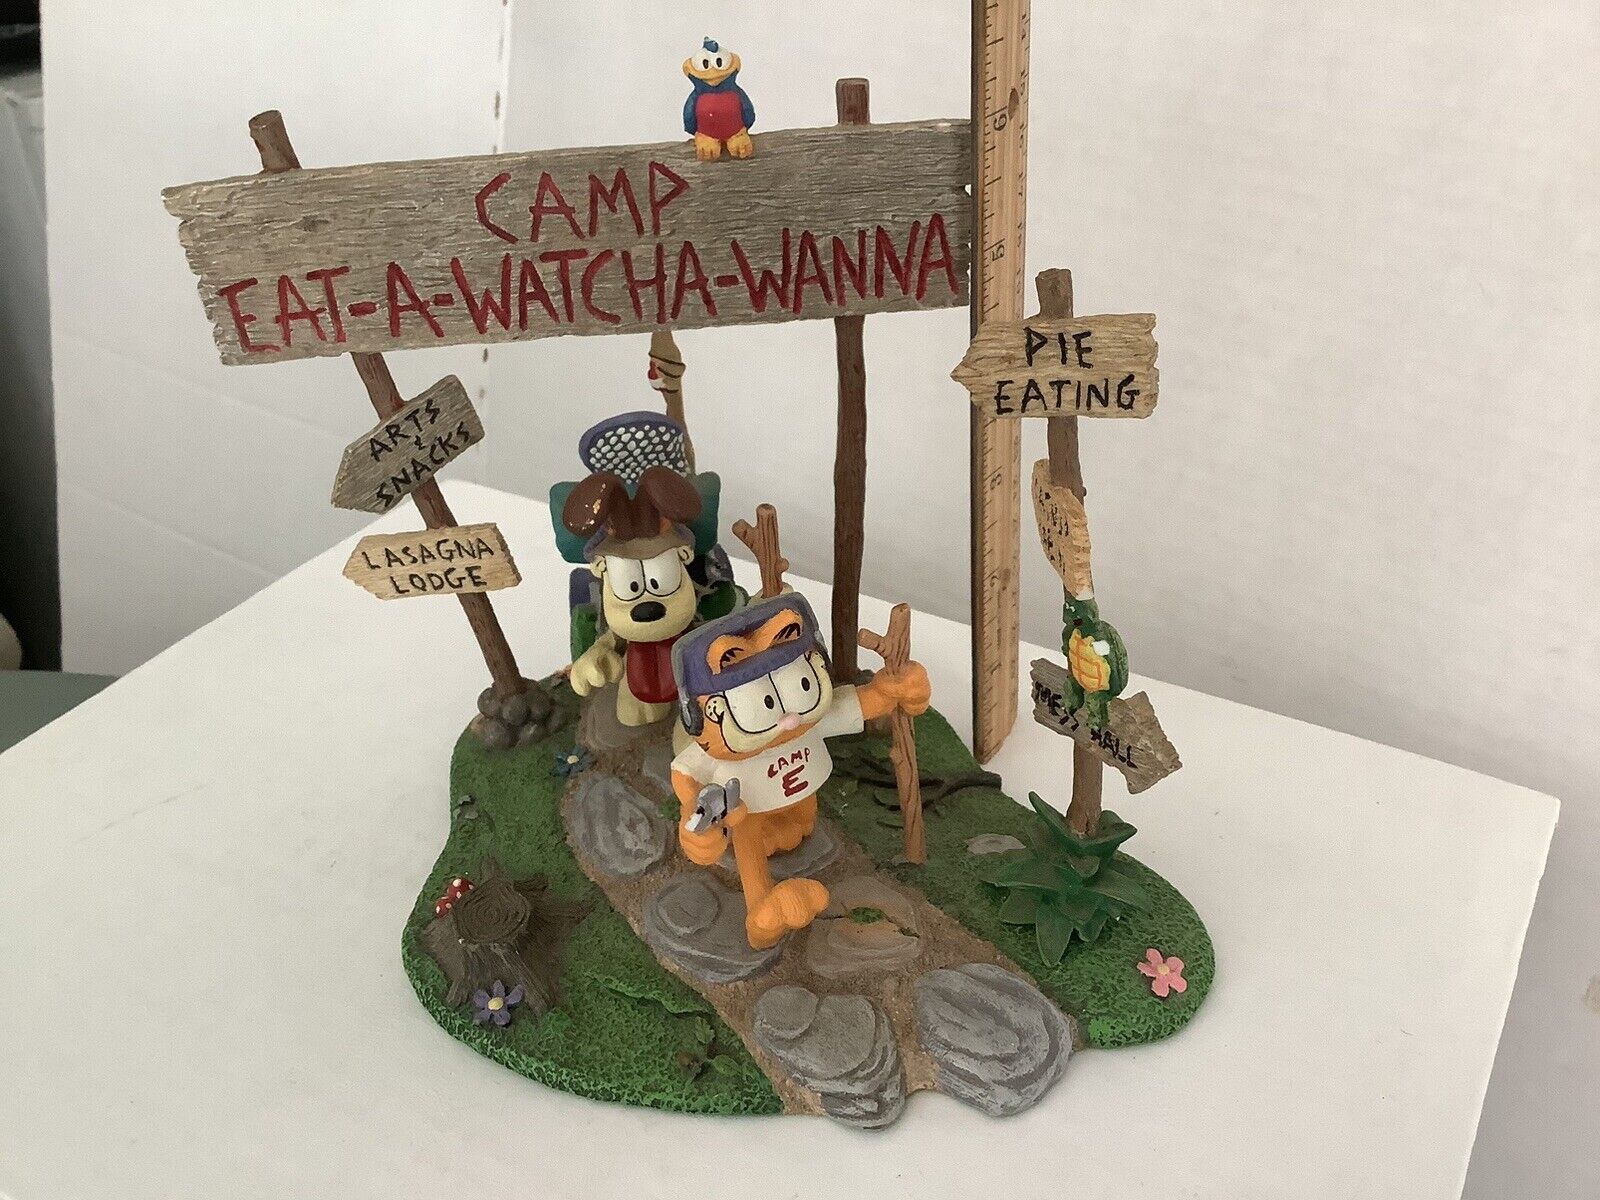 Garfield Camp Eat-A-Watcha-Wanna by Danbury Mint Figure